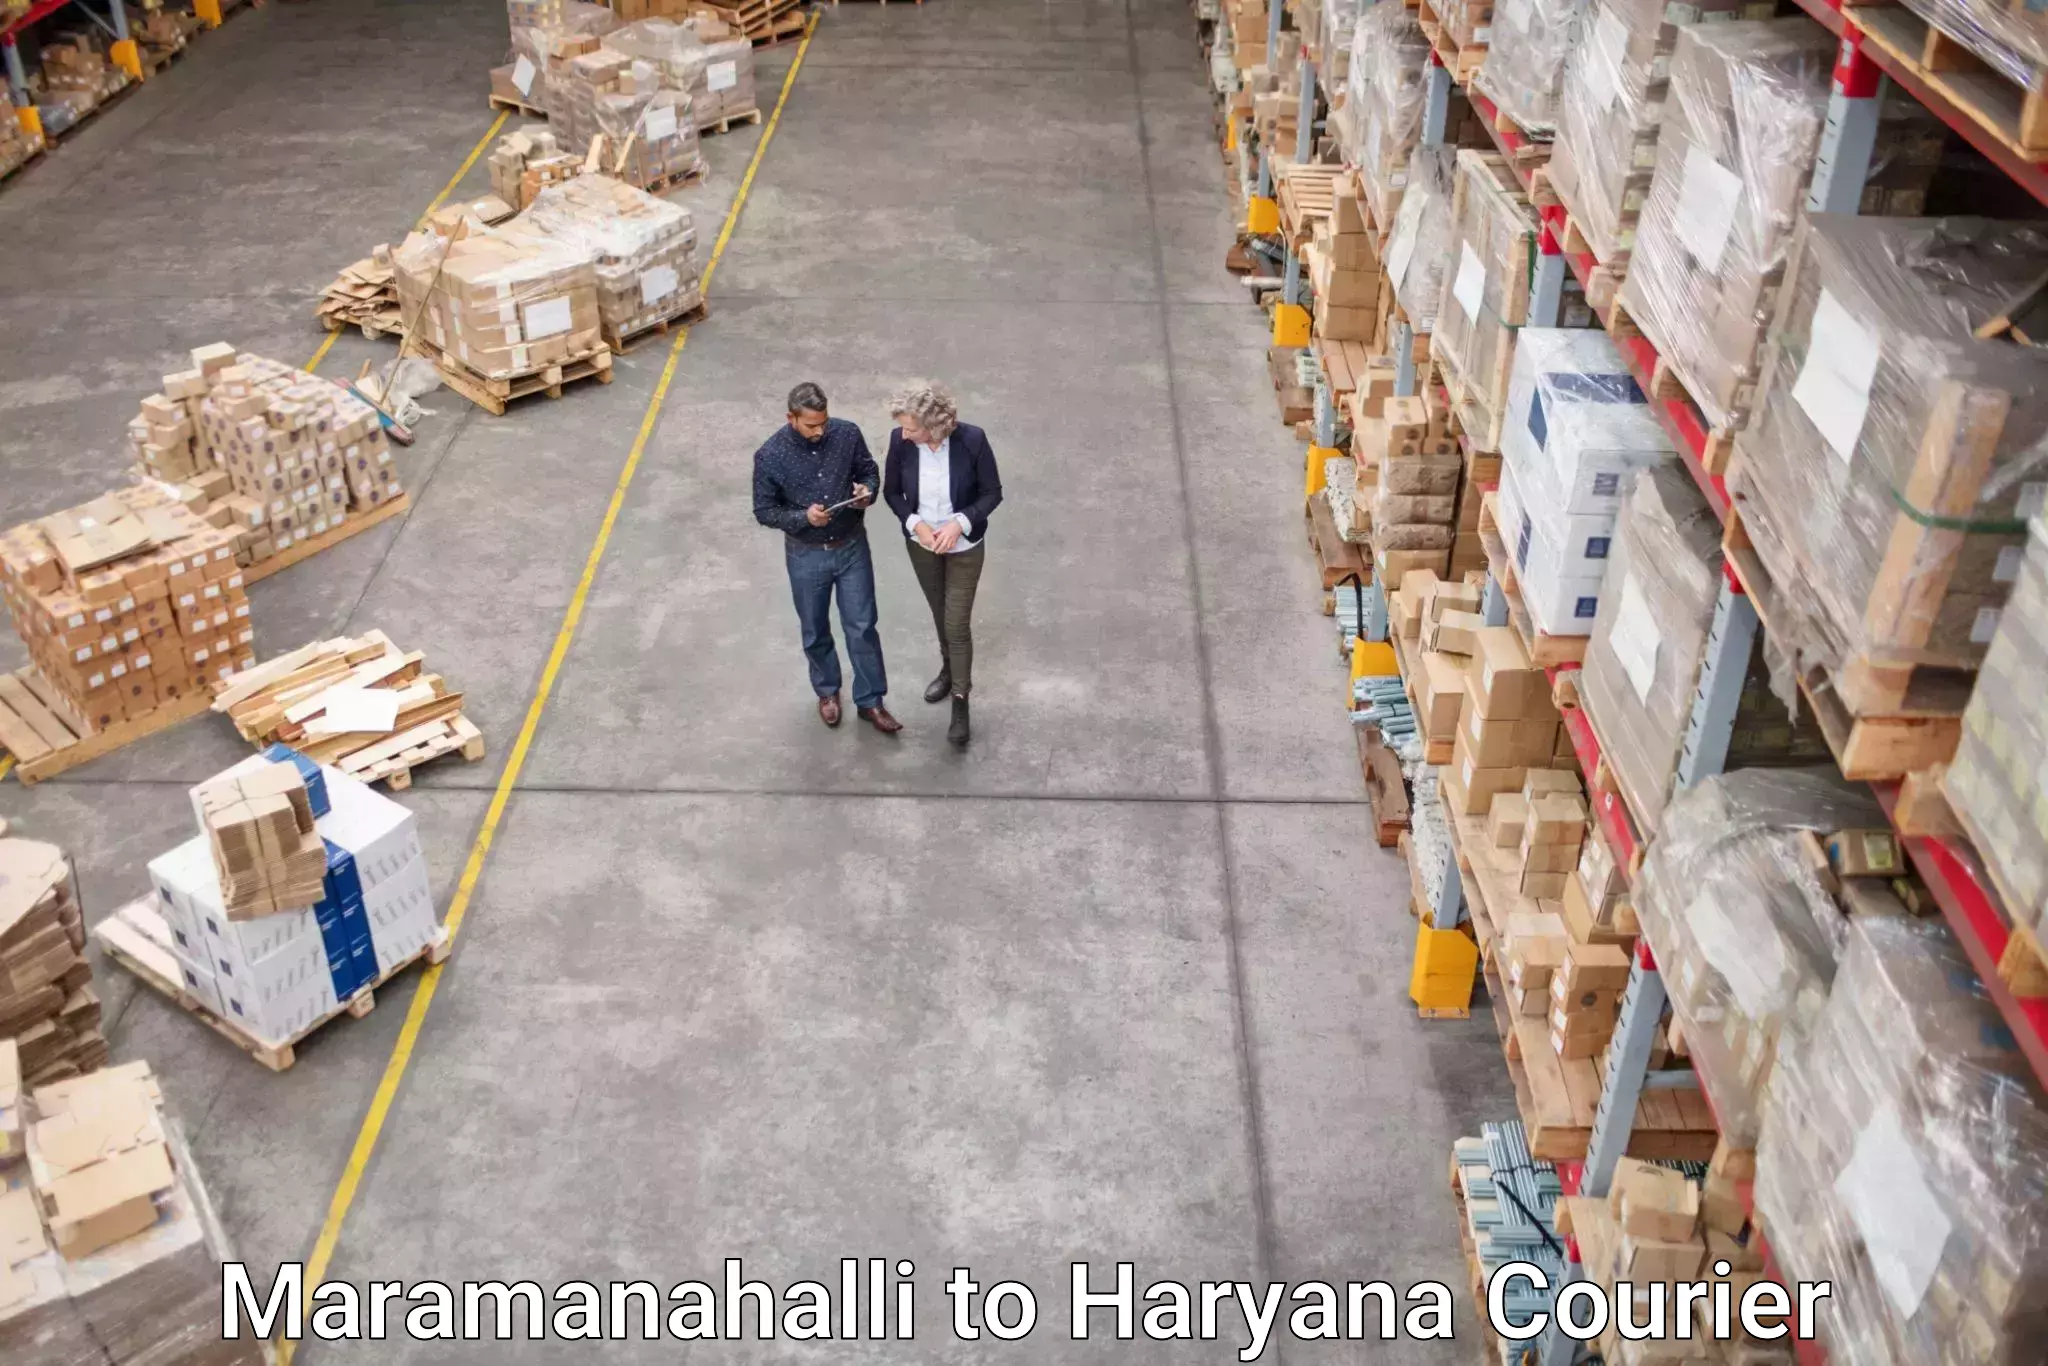 Courier service comparison Maramanahalli to Narwana